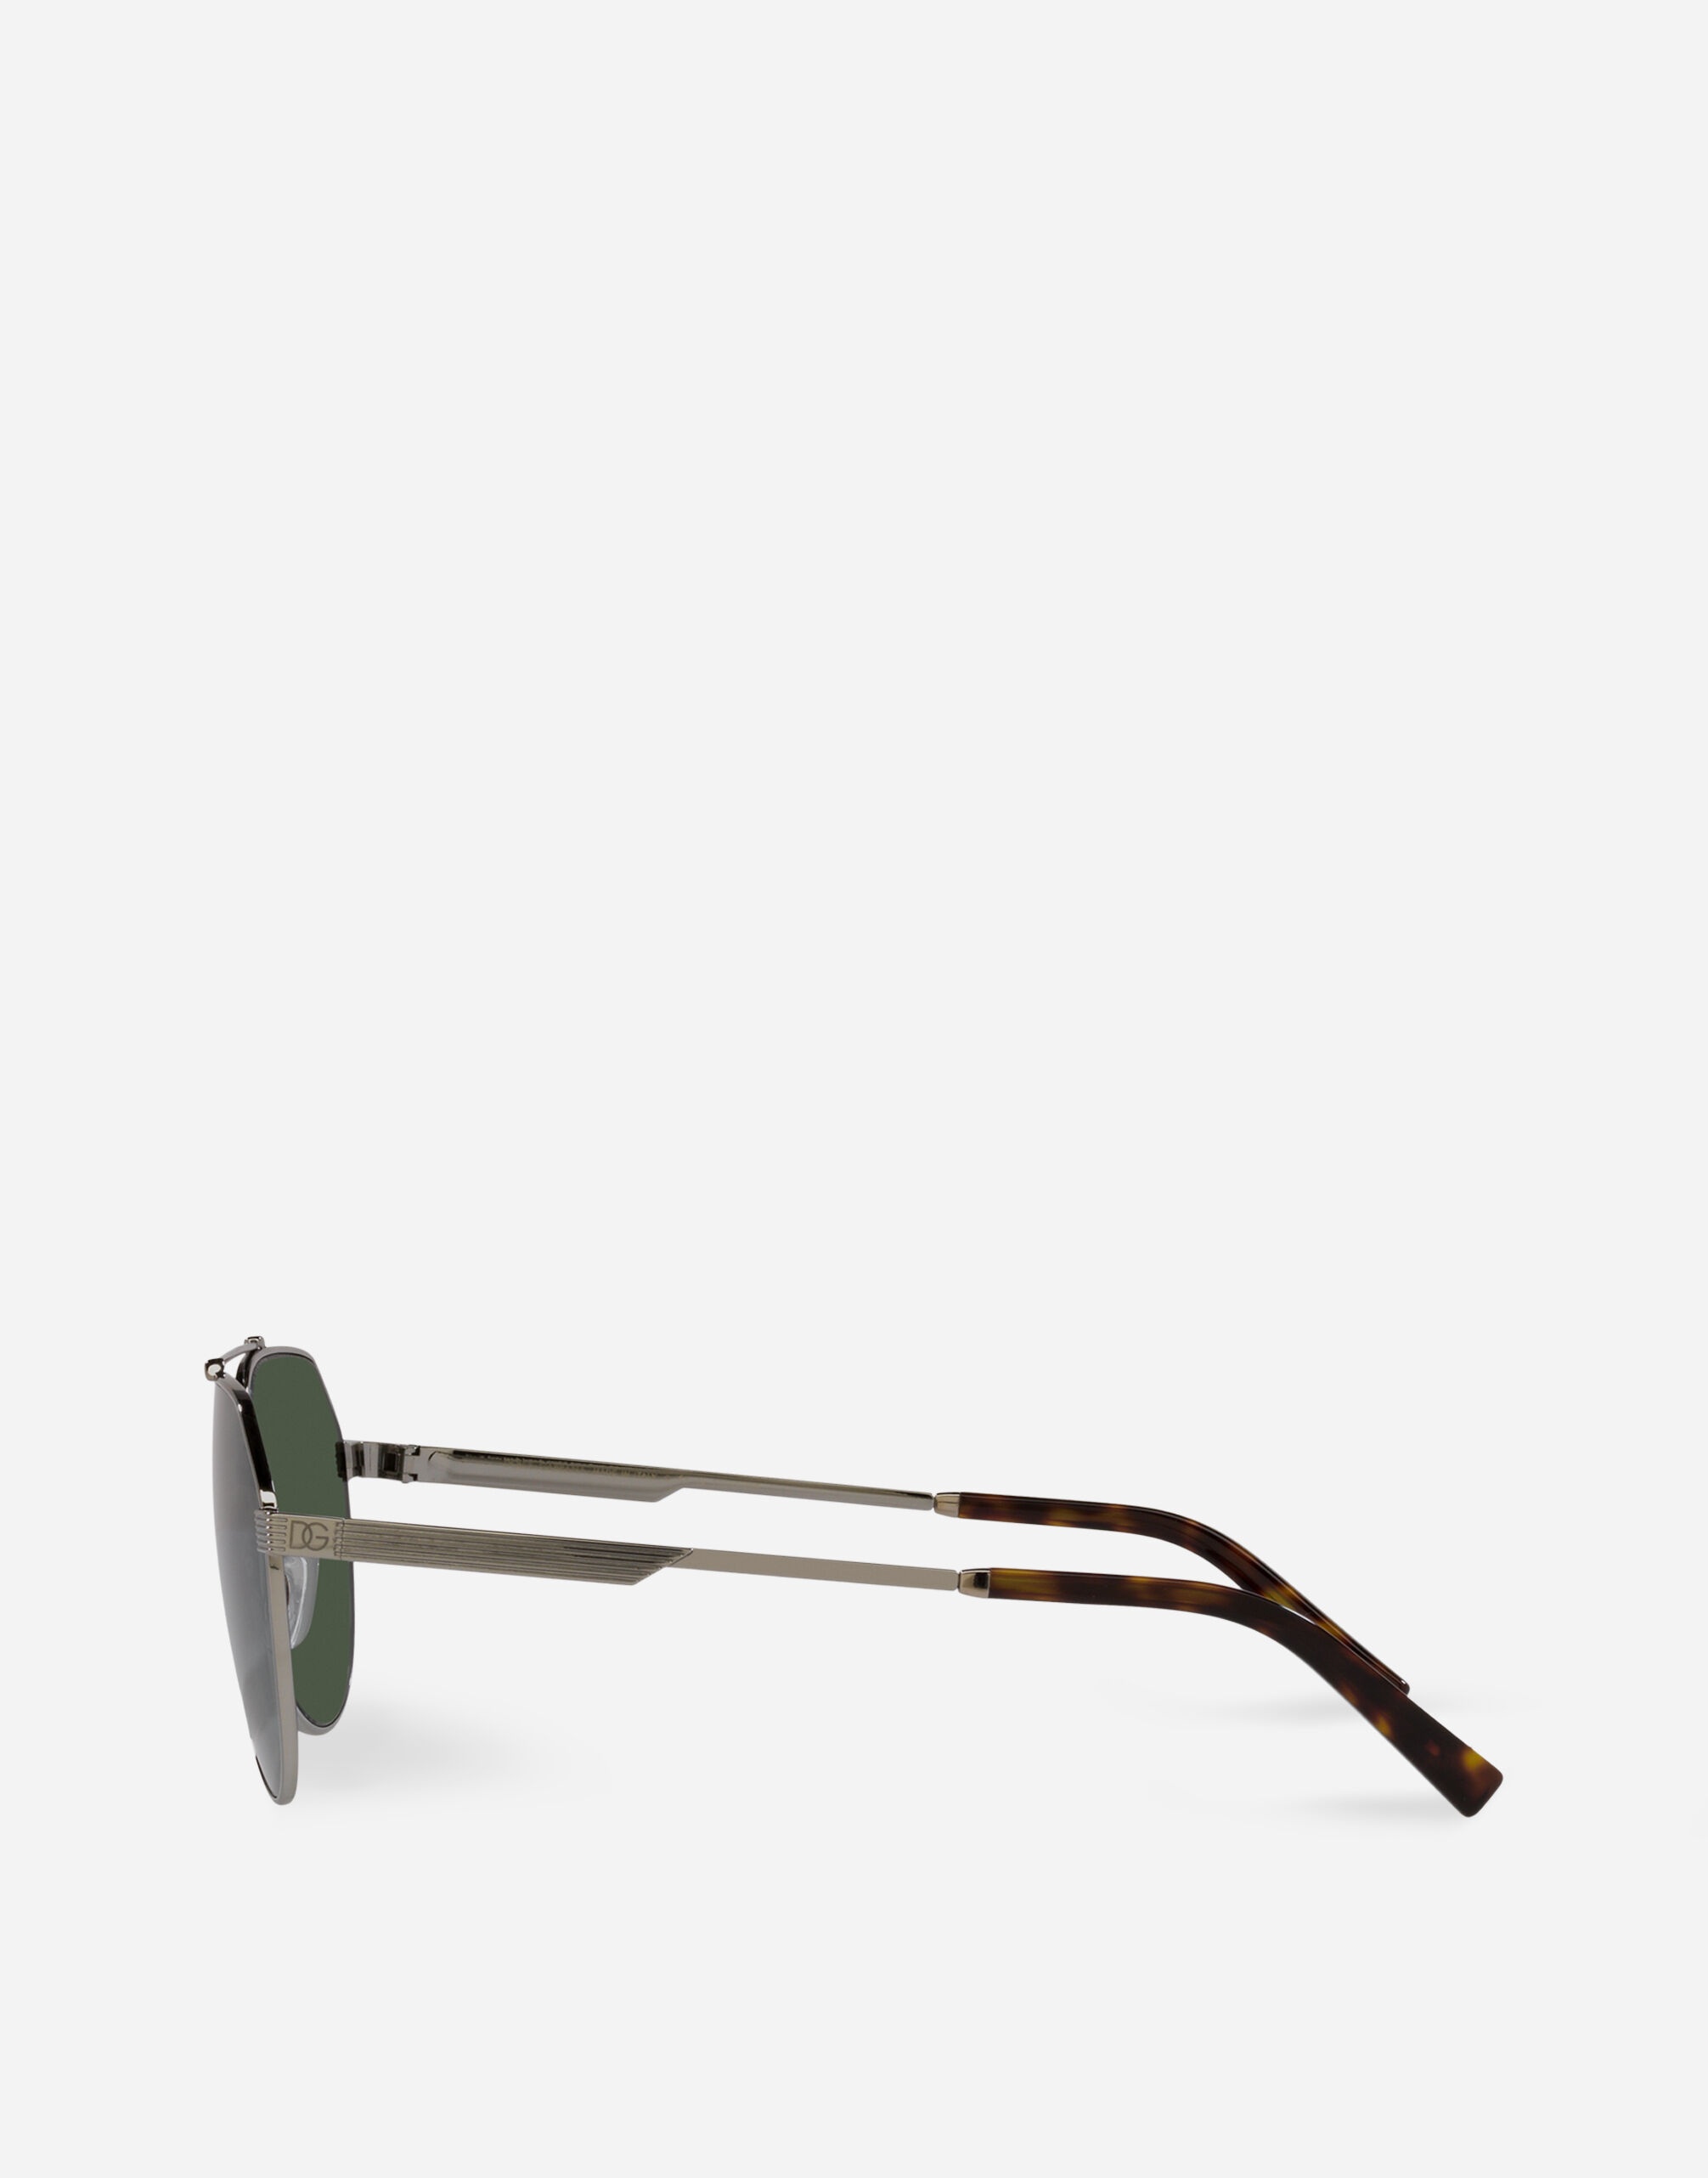 Gros grain sunglasses - 3